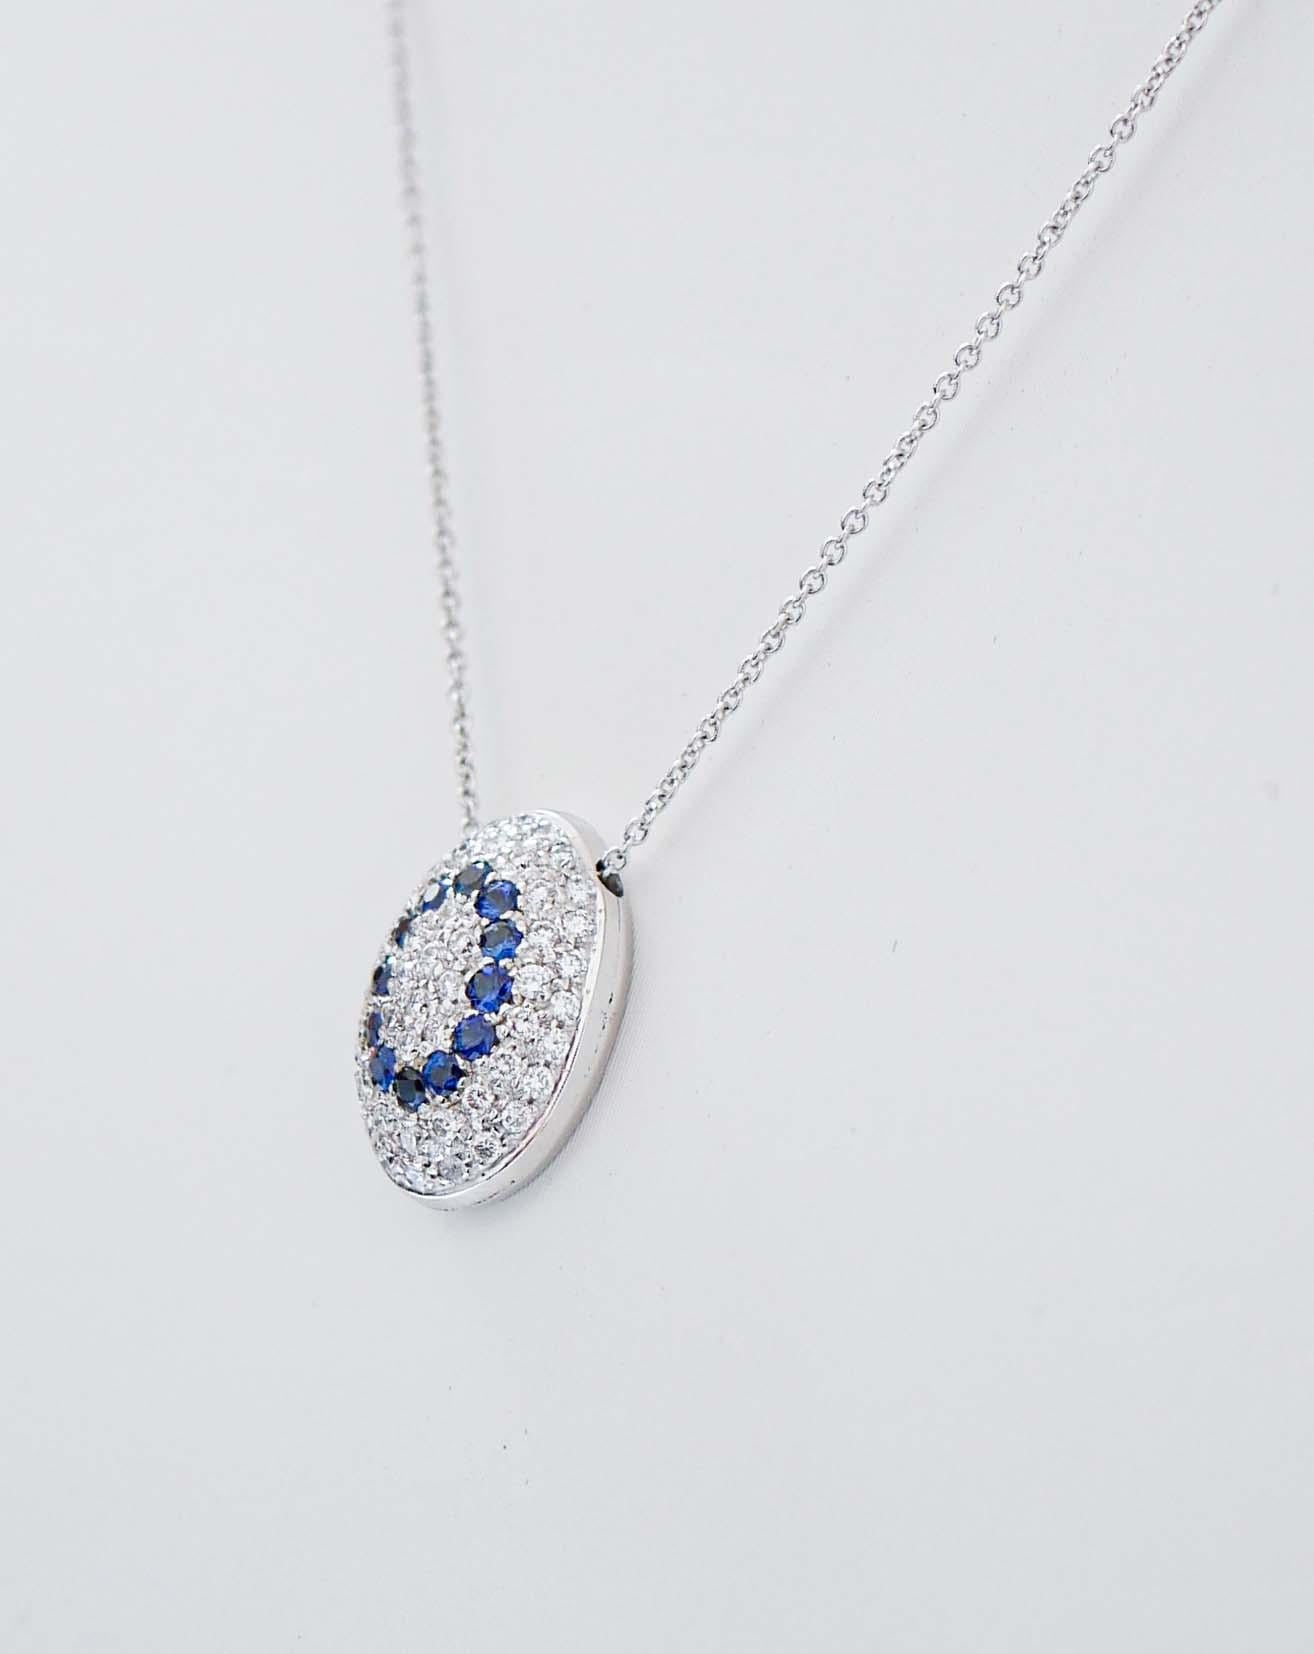 Modern Sapphires, Diamonds, 18 Karat White Gold Pendant Necklace. For Sale